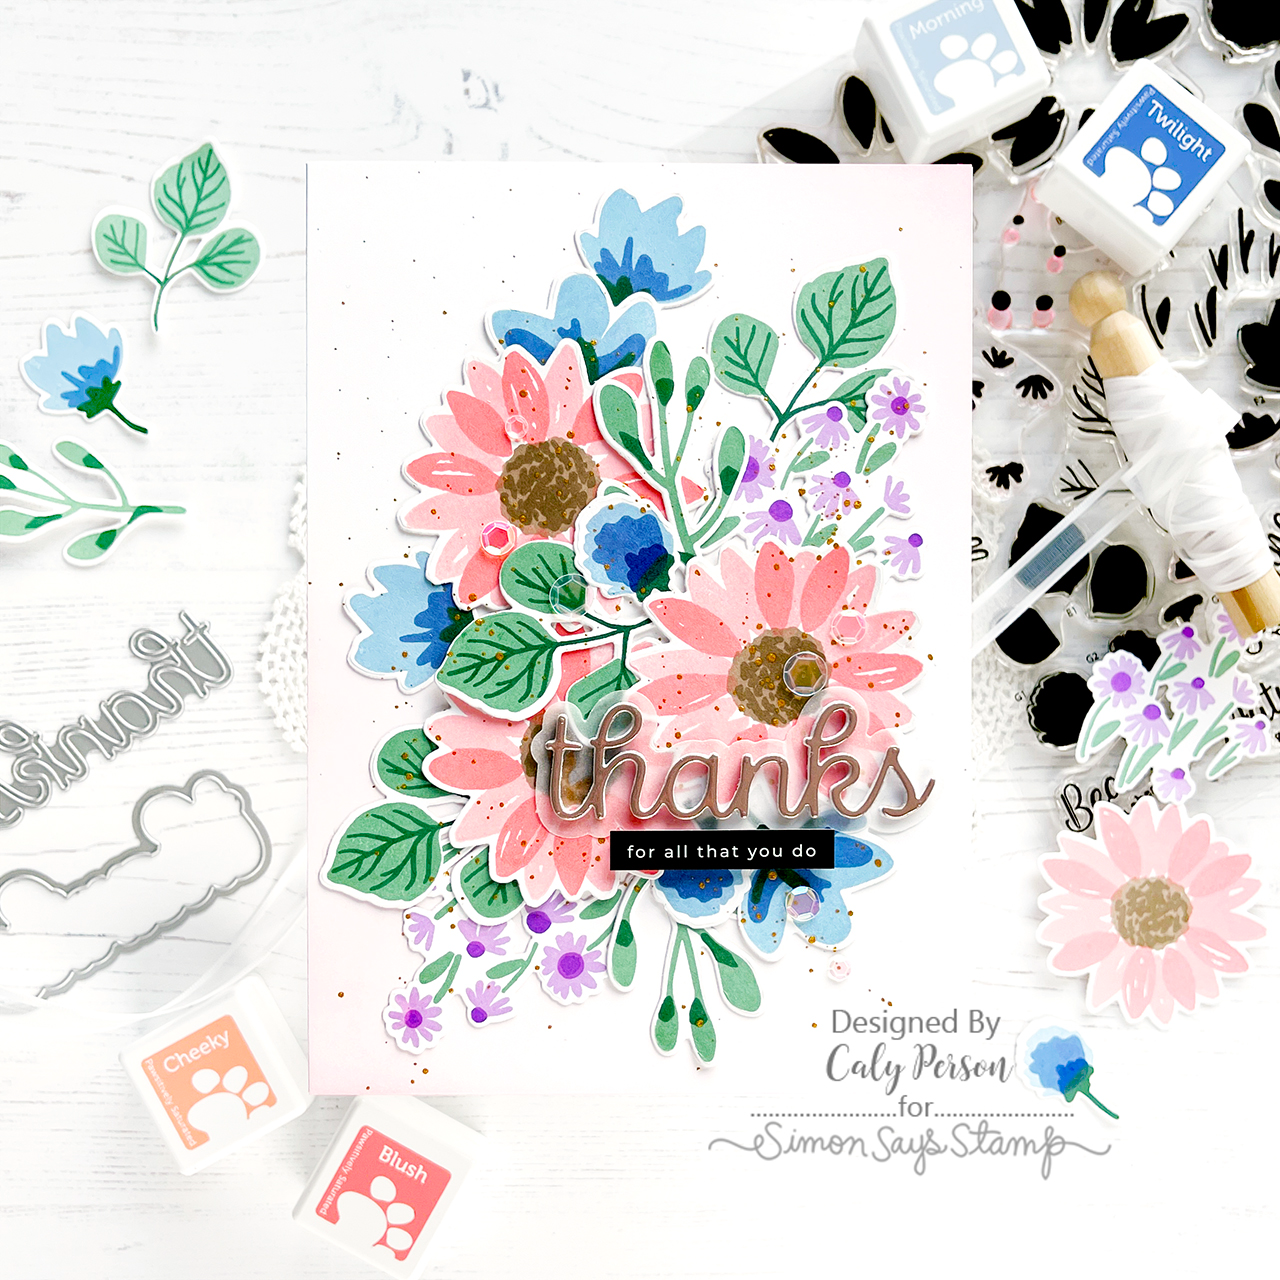 Gina K Designs Breath of Sunshine Clear Stamps Gkd177